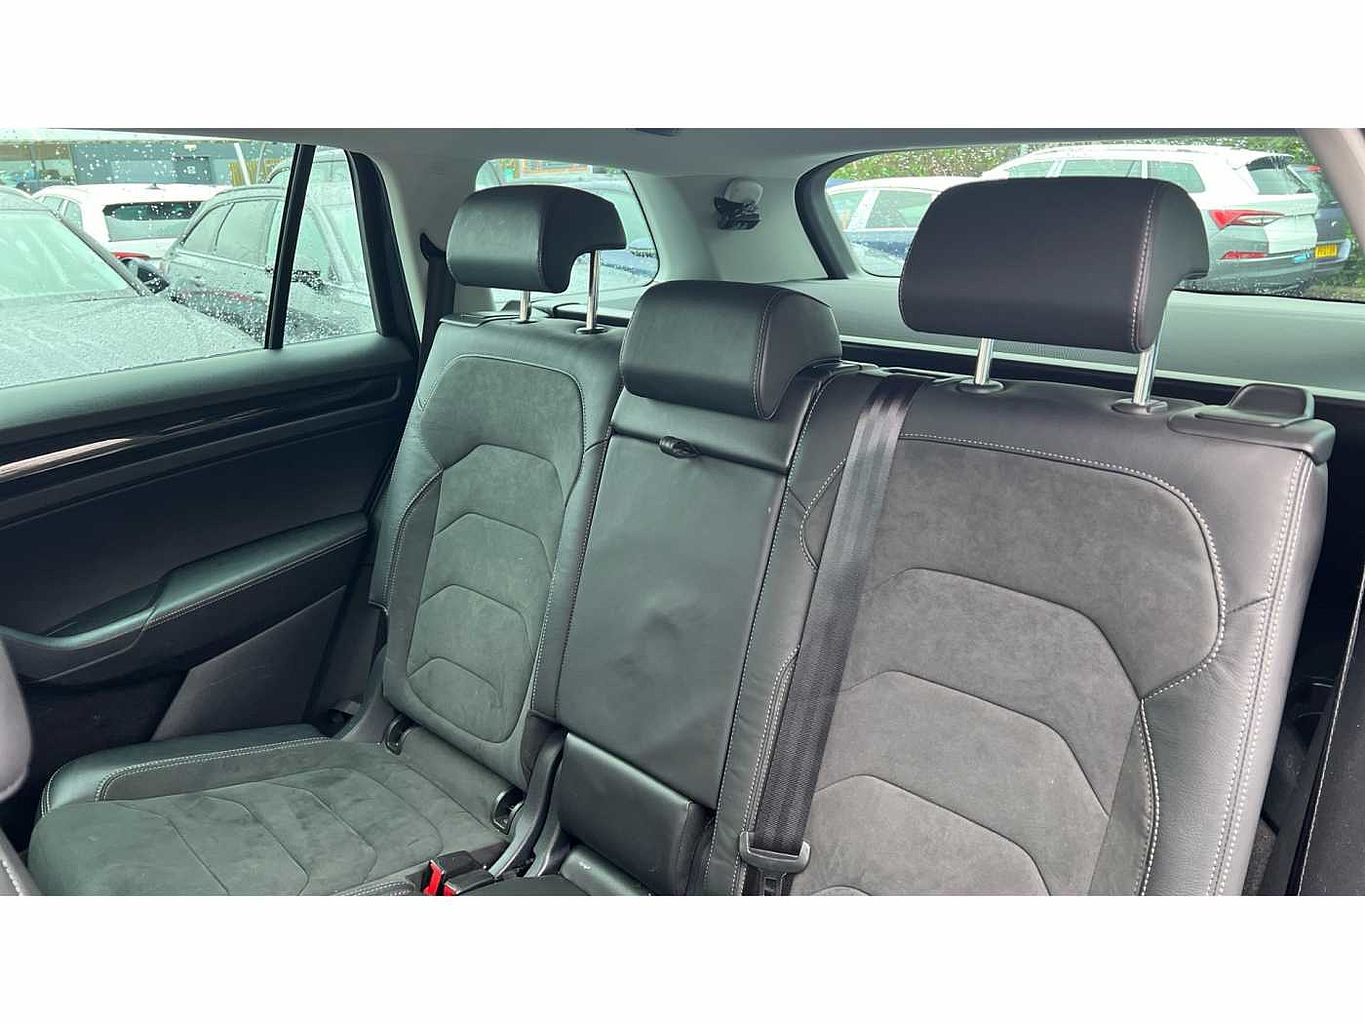 SKODA Kodiaq 1.5 TSI (150ps) SE L (7 seats) ACT SUV